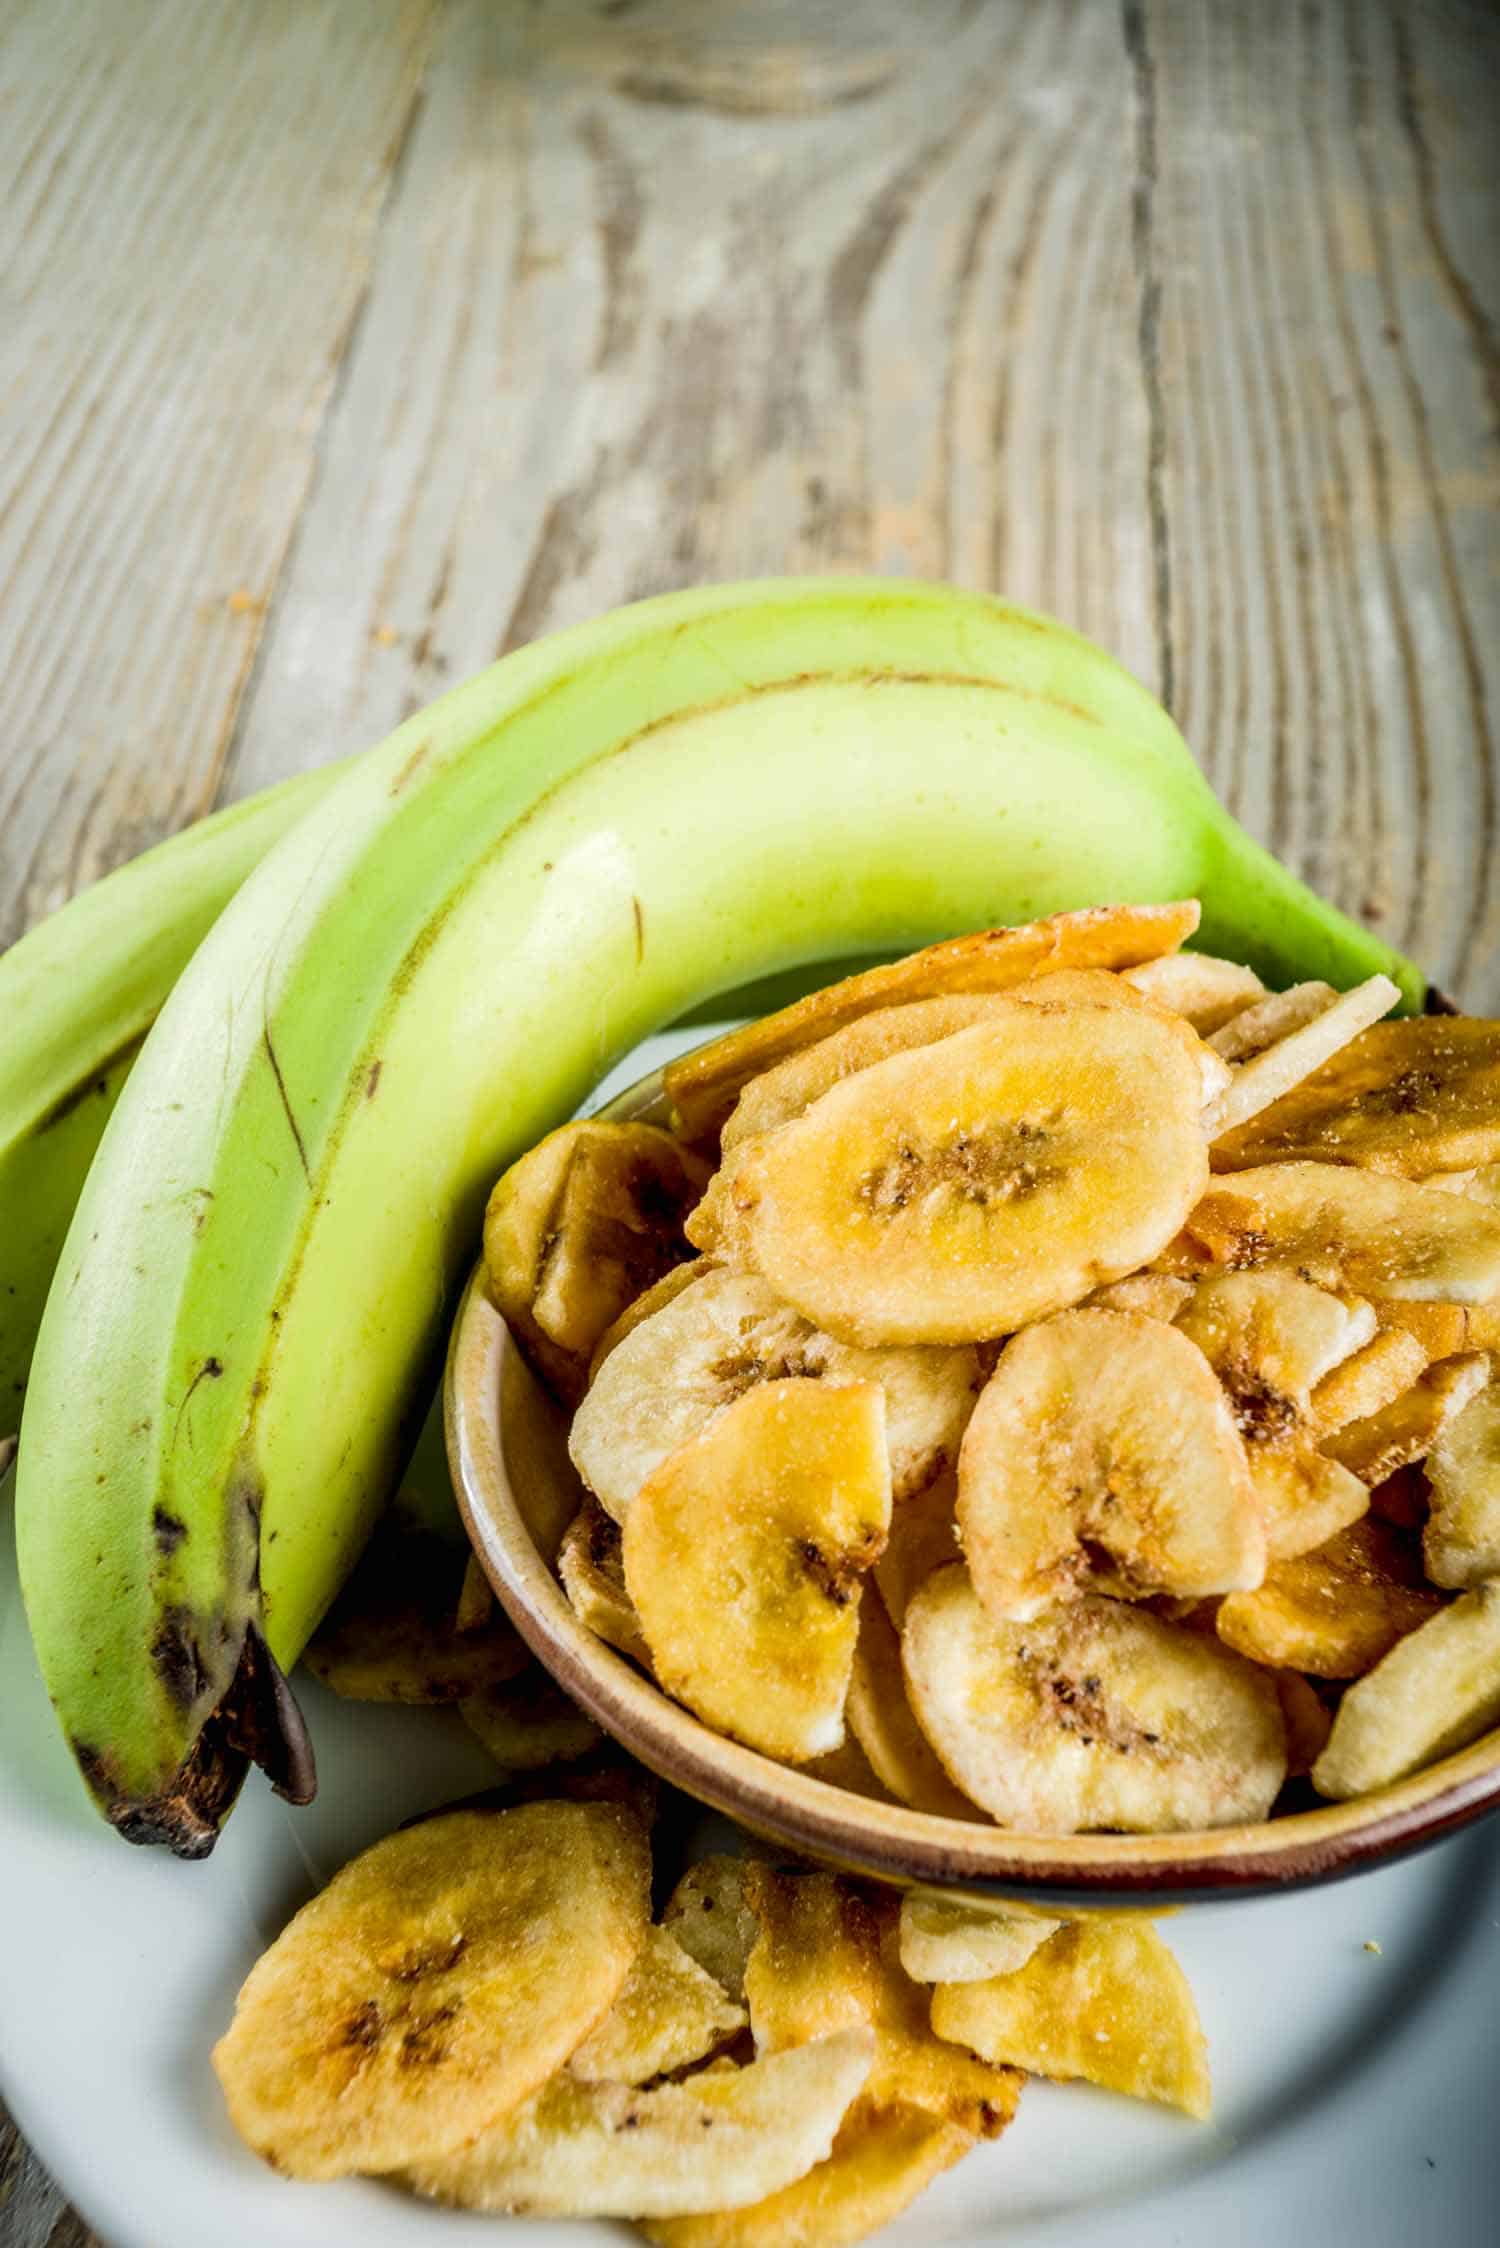 Banana Juice, Cavendish Banana, Cooking Banana, Fruit, Food, Saba Banana,  Banana Cake, Flavor transparent background PNG clipart